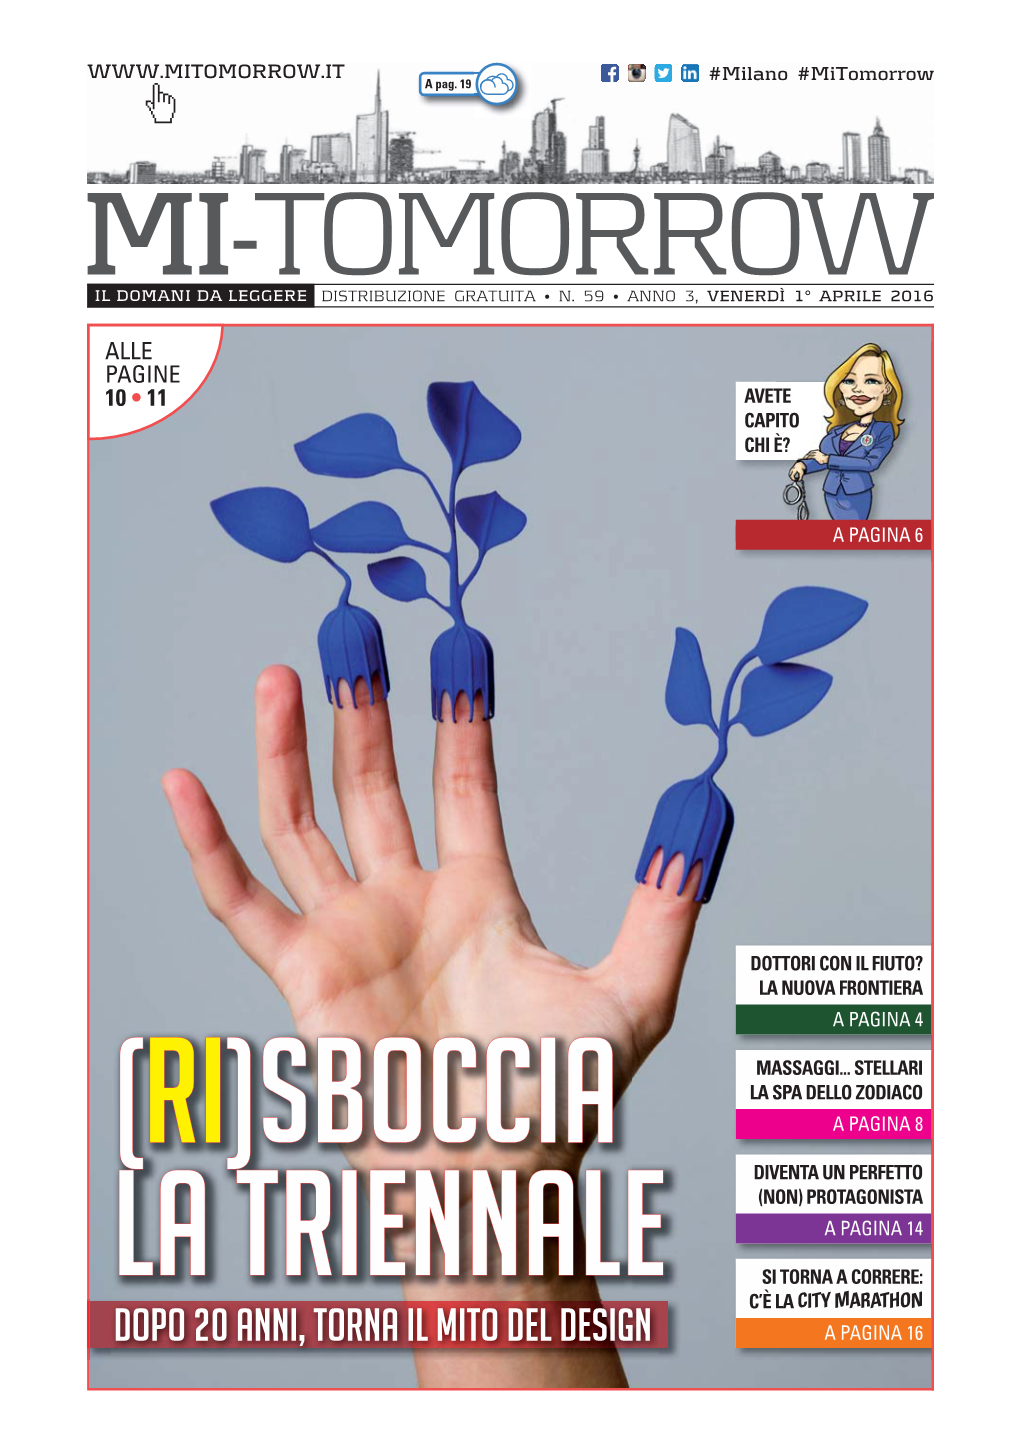 Mi-Tomorrow | Venerdì 1° Aprile 2016 Milano Racconta